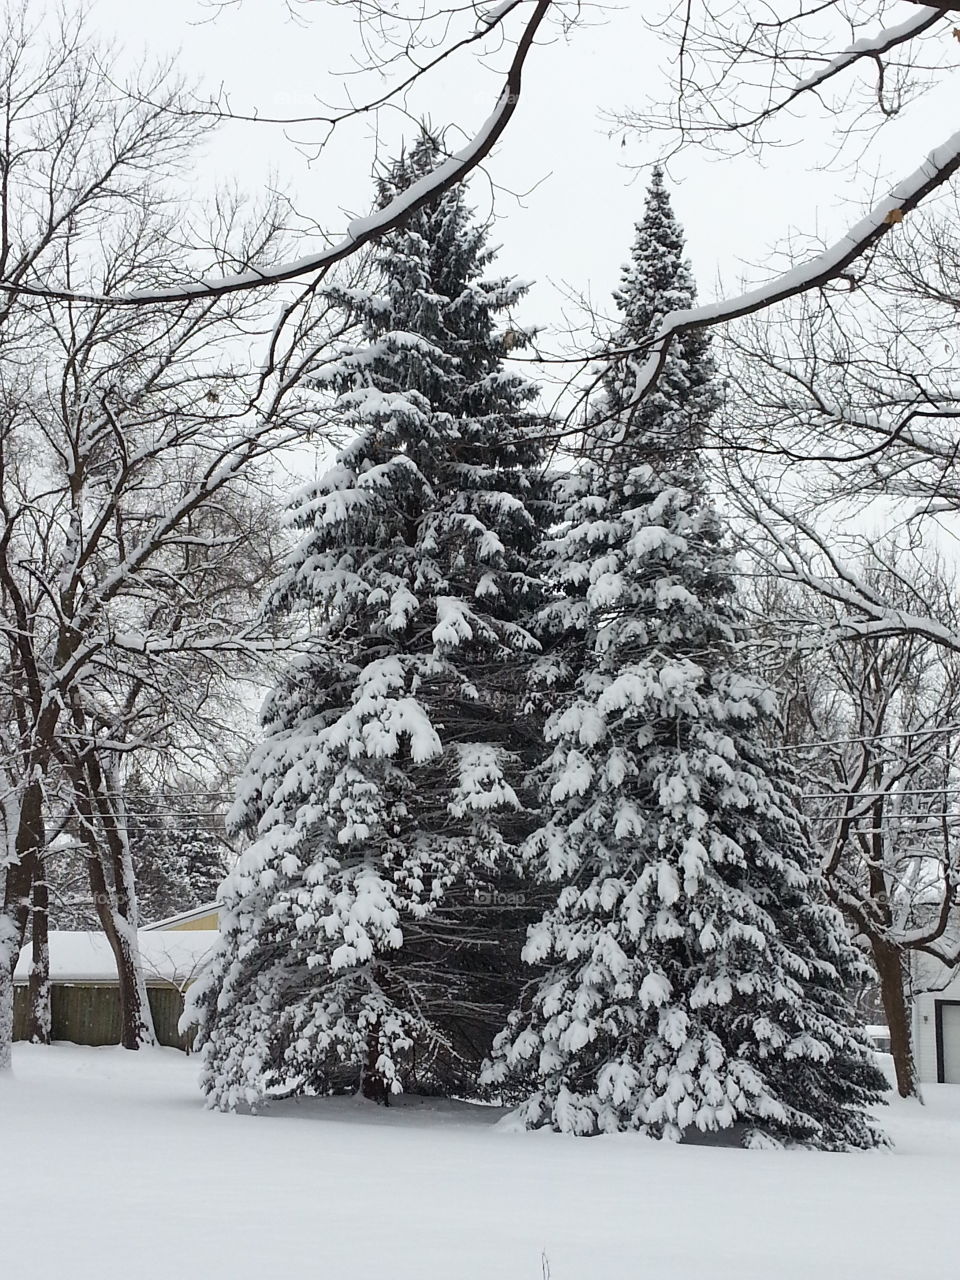 Snow on my pines